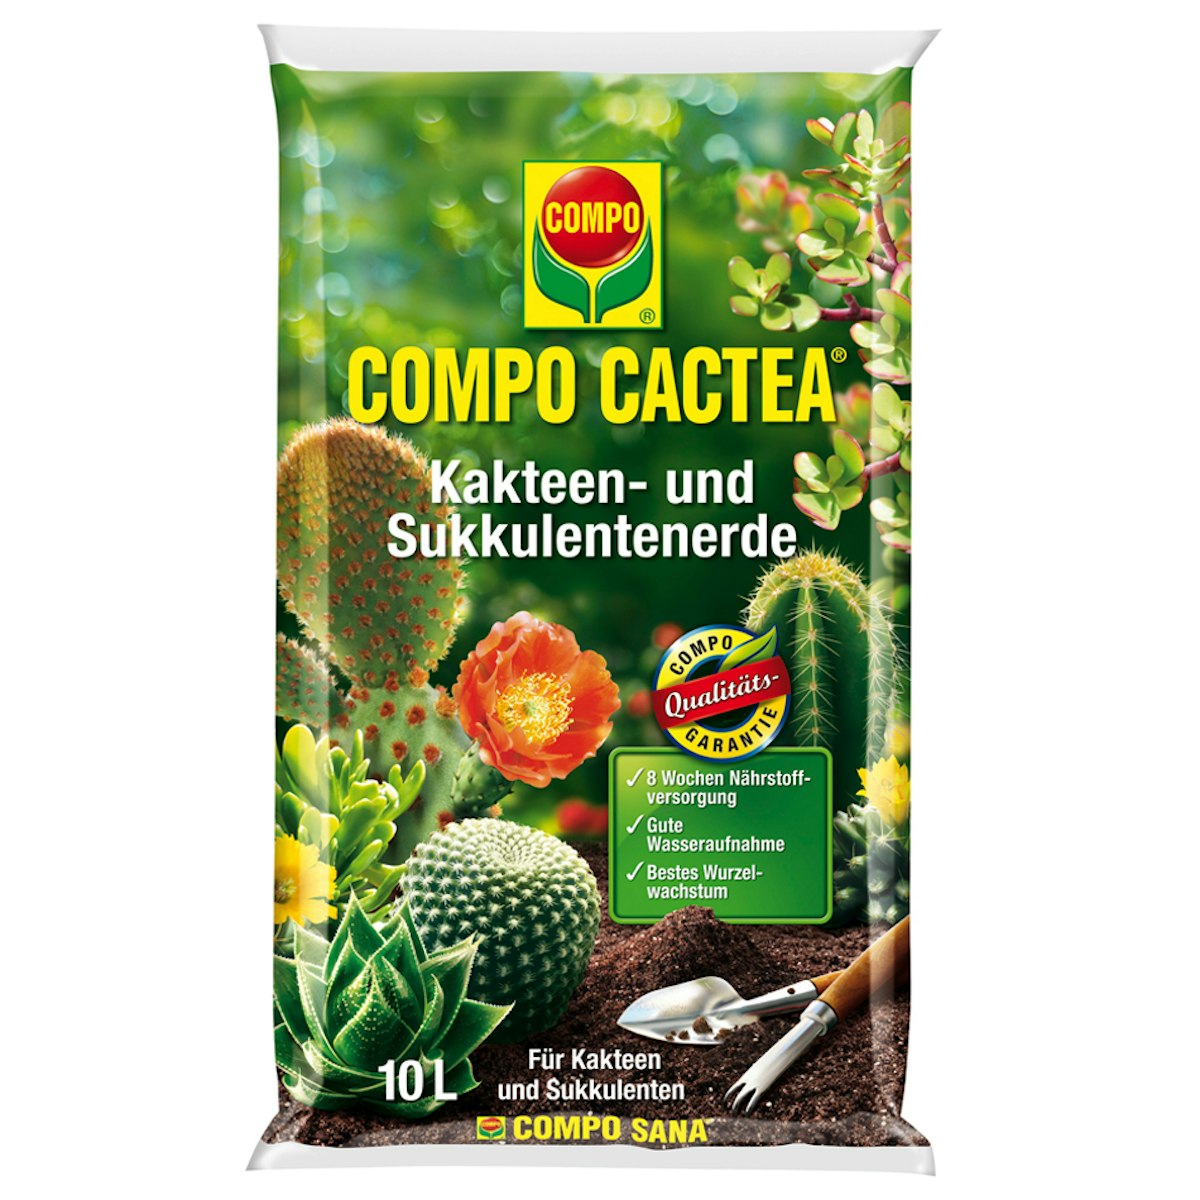 COMPO CACTEA® Kakteen- und Sukkulentenerde 10 L von COMPO